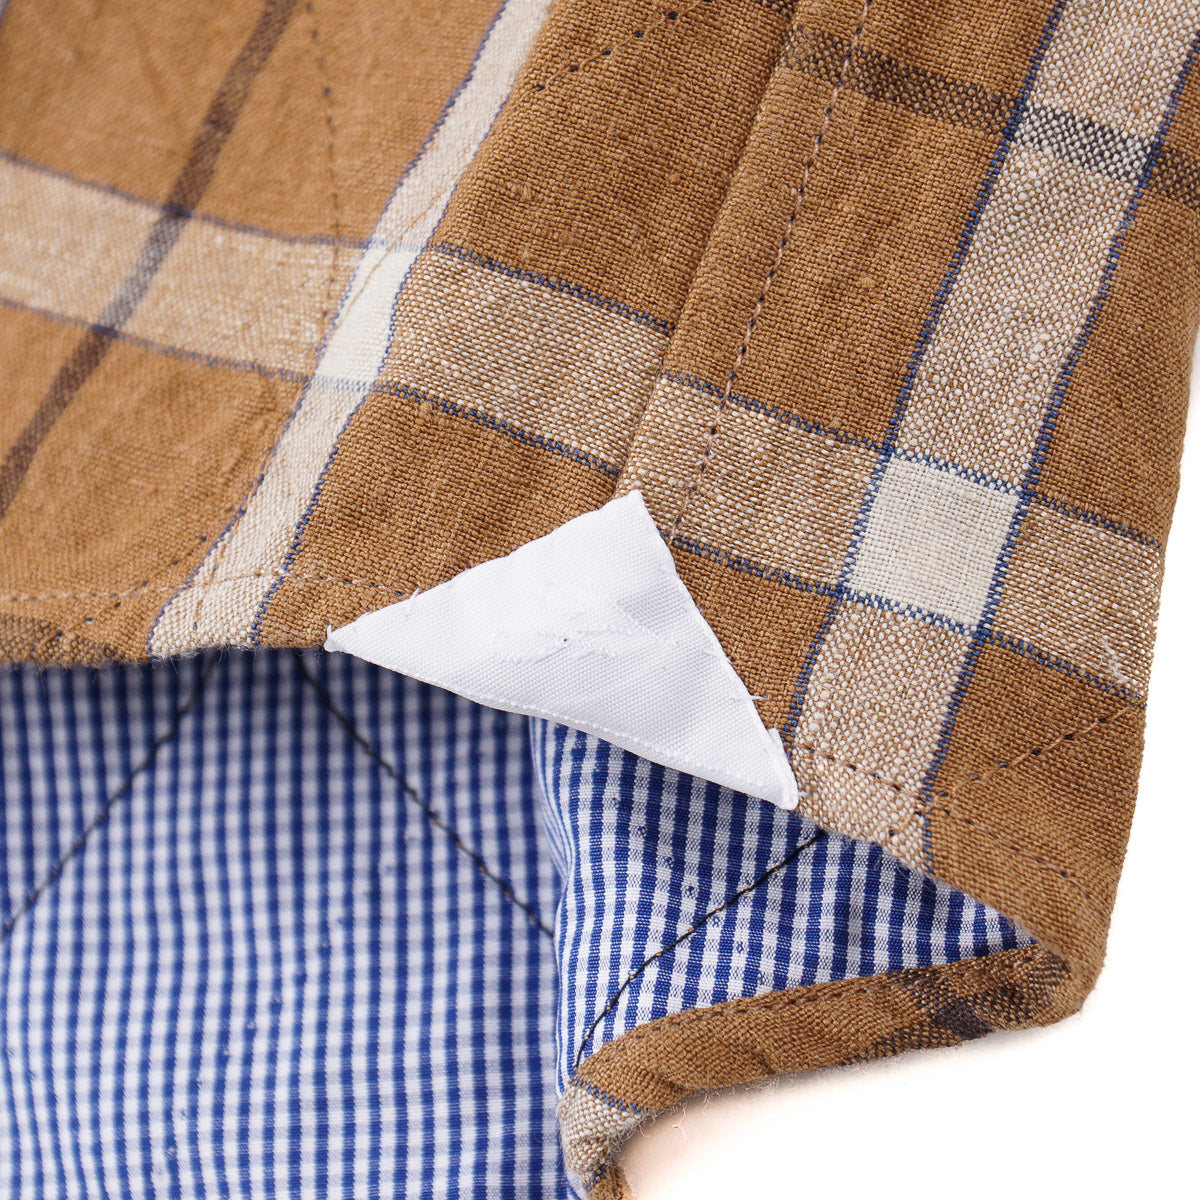 Finamore Quilted Linen Shirt-Jacket - Top Shelf Apparel